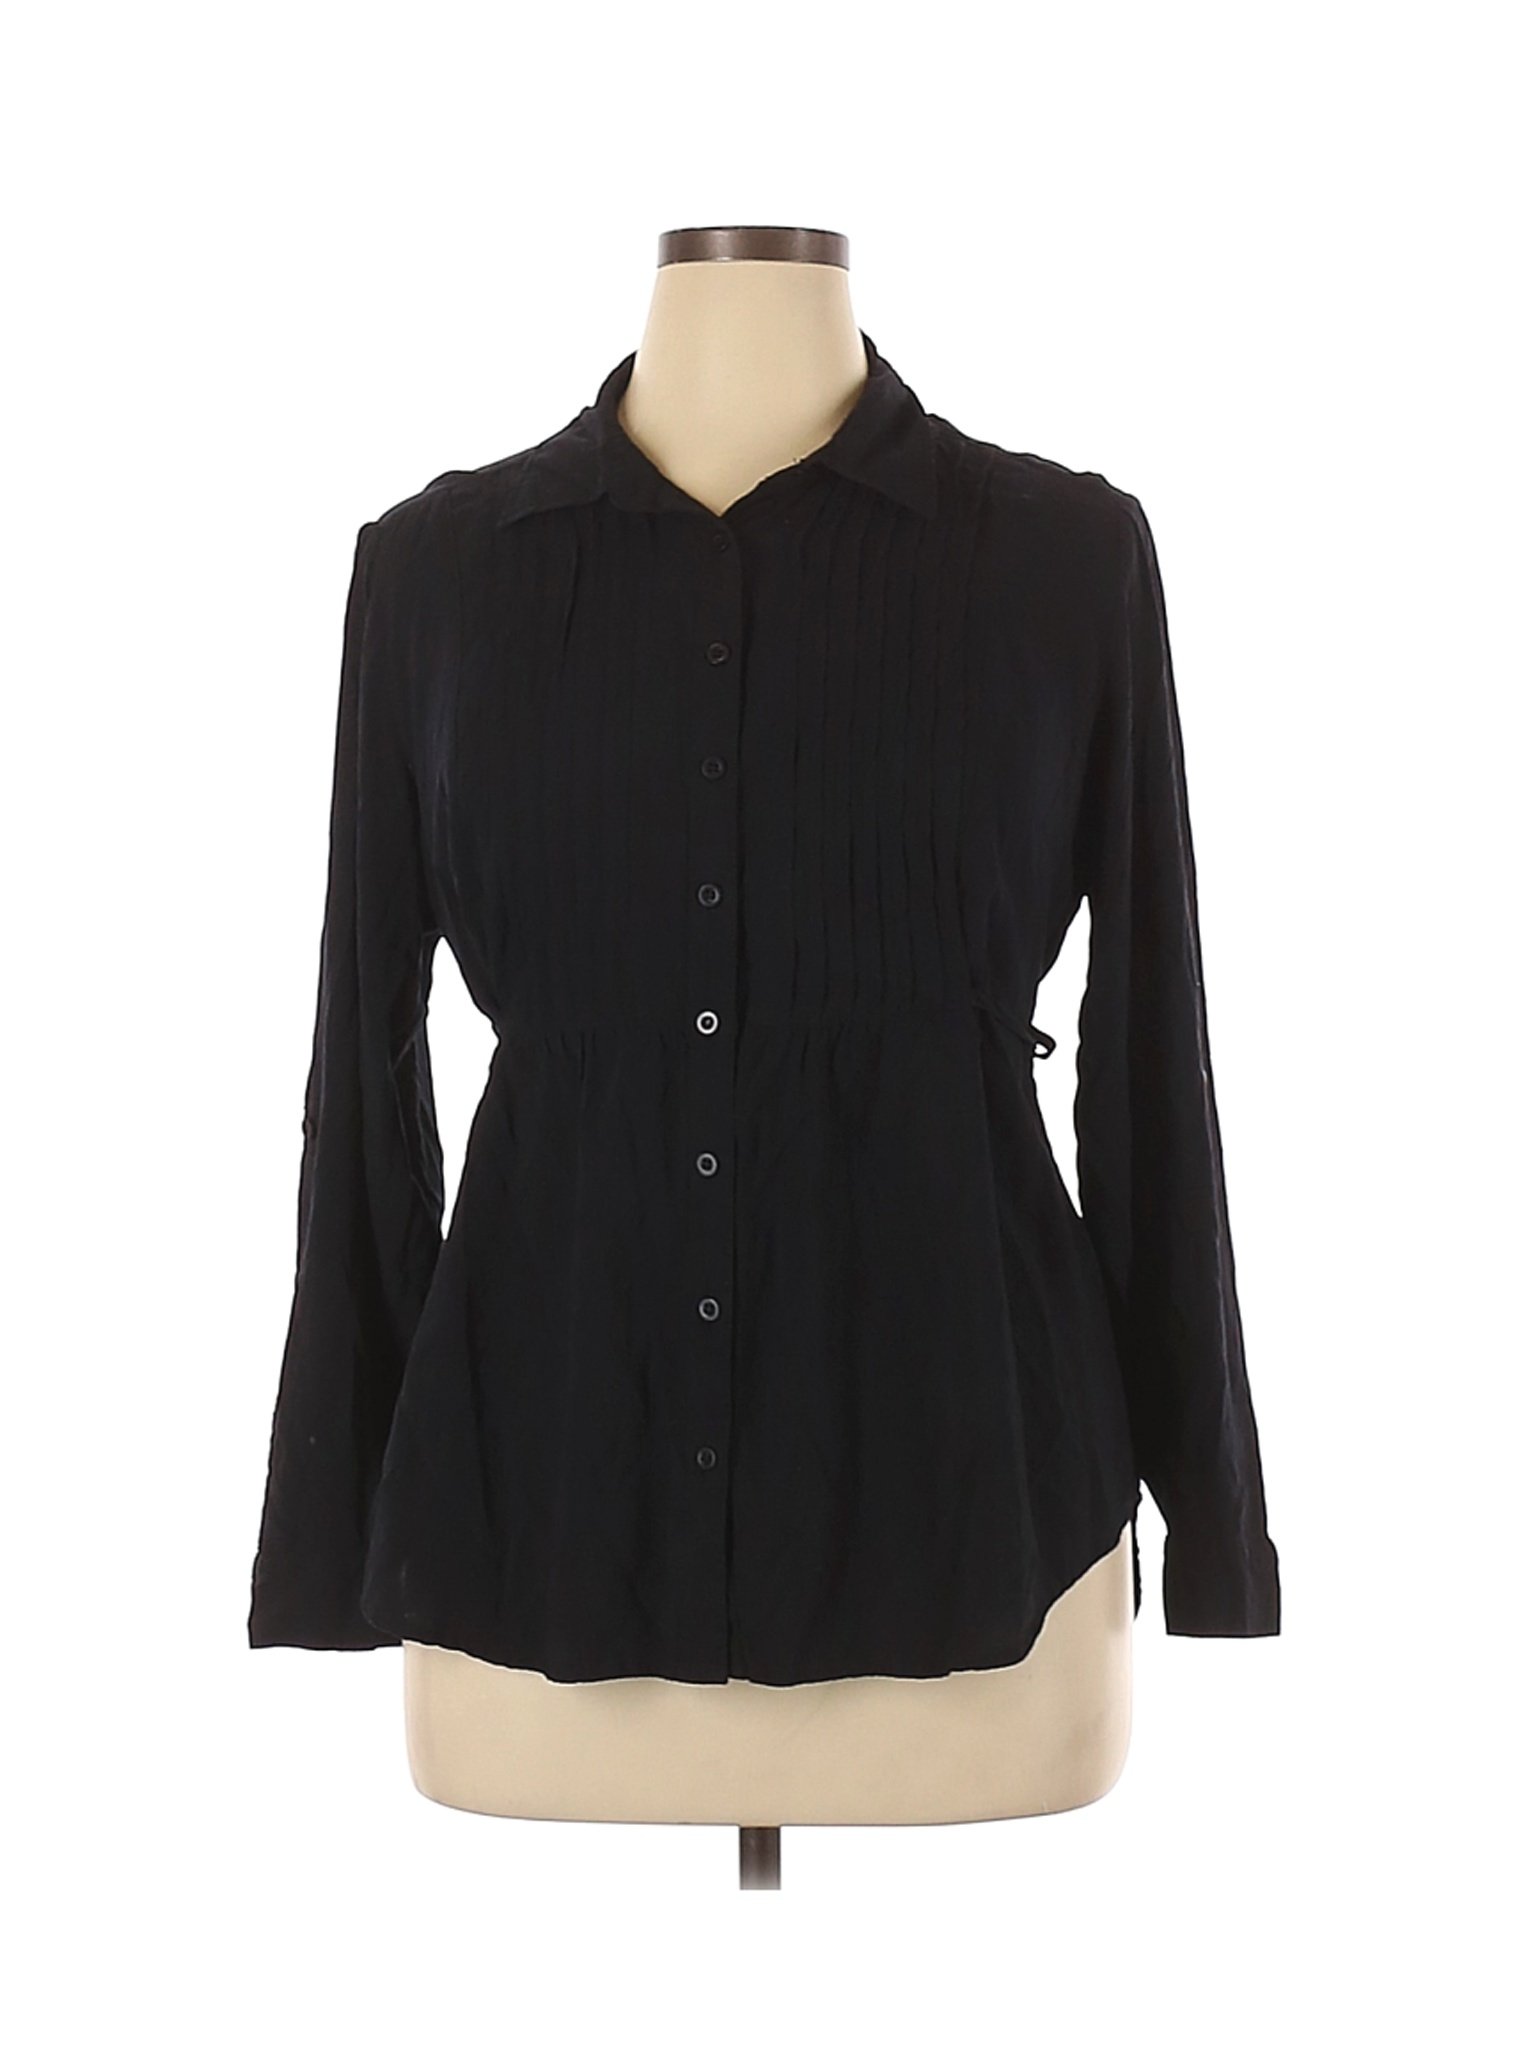 Torrid Women Black Long Sleeve Button-Down Shirt 1X Plus | eBay